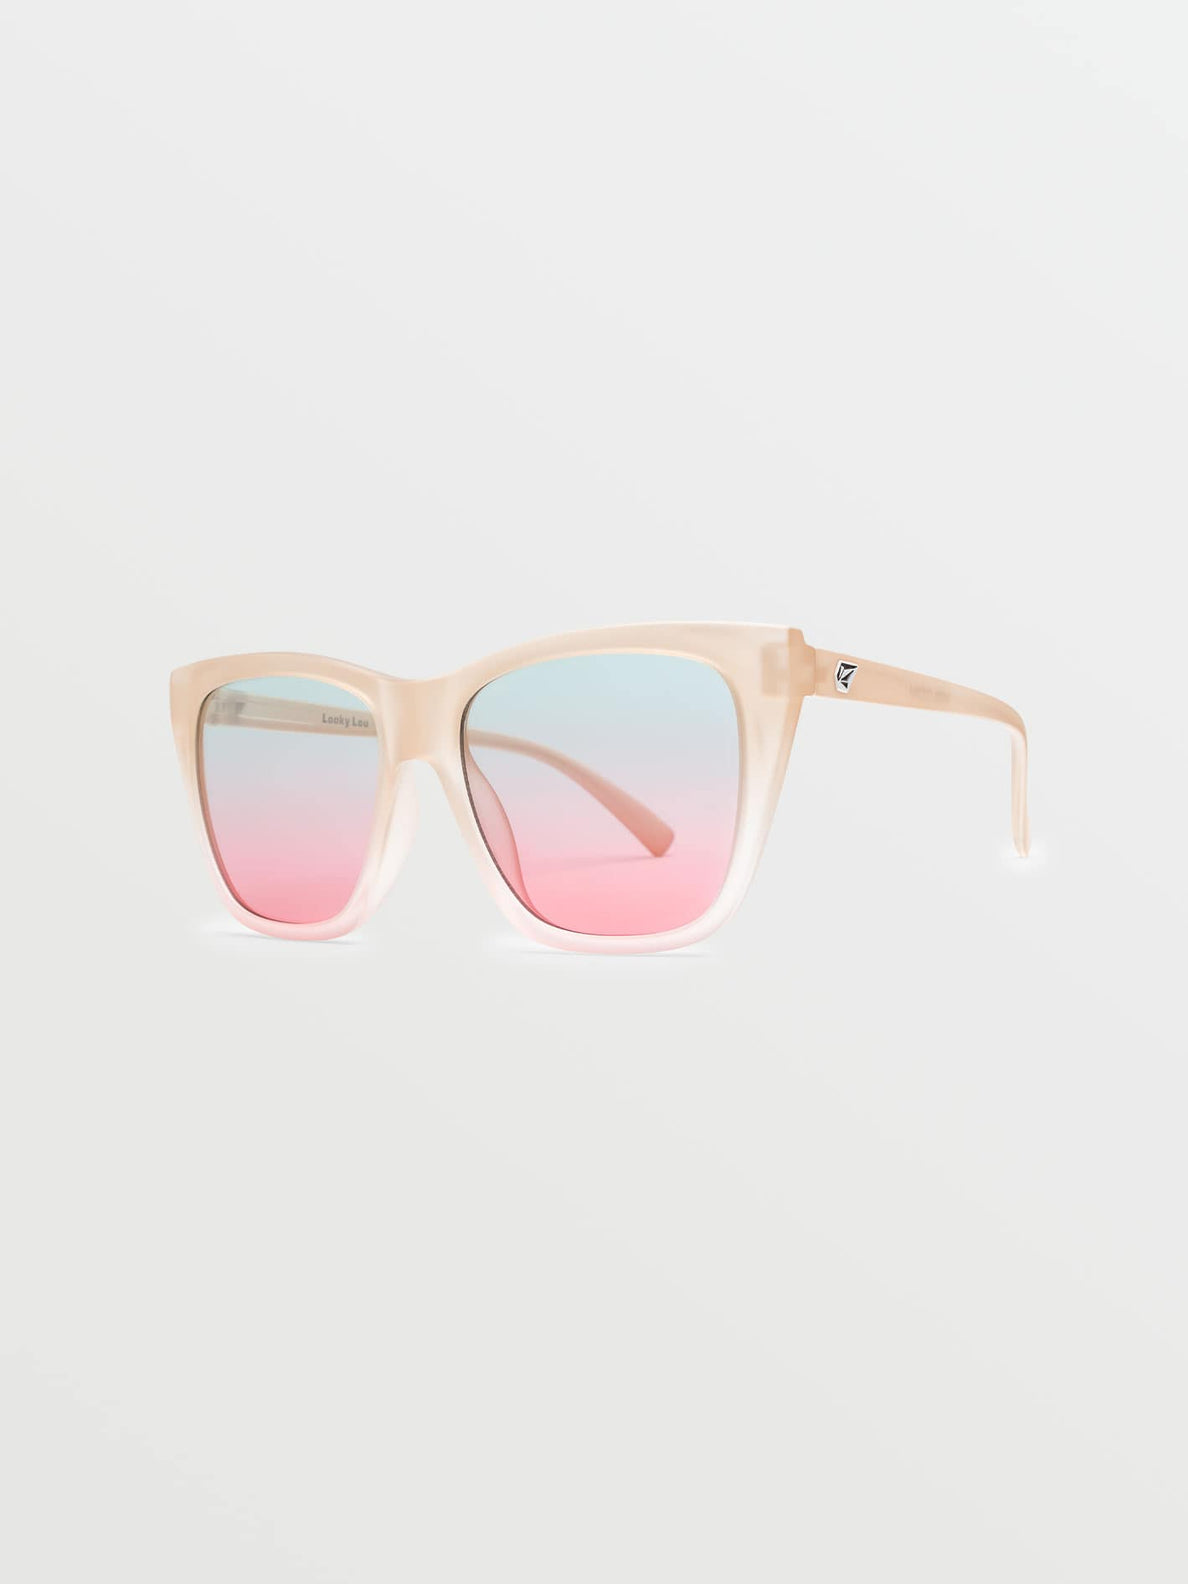 Looky Lou Sunglasses - So Faded/Aqua Gradient